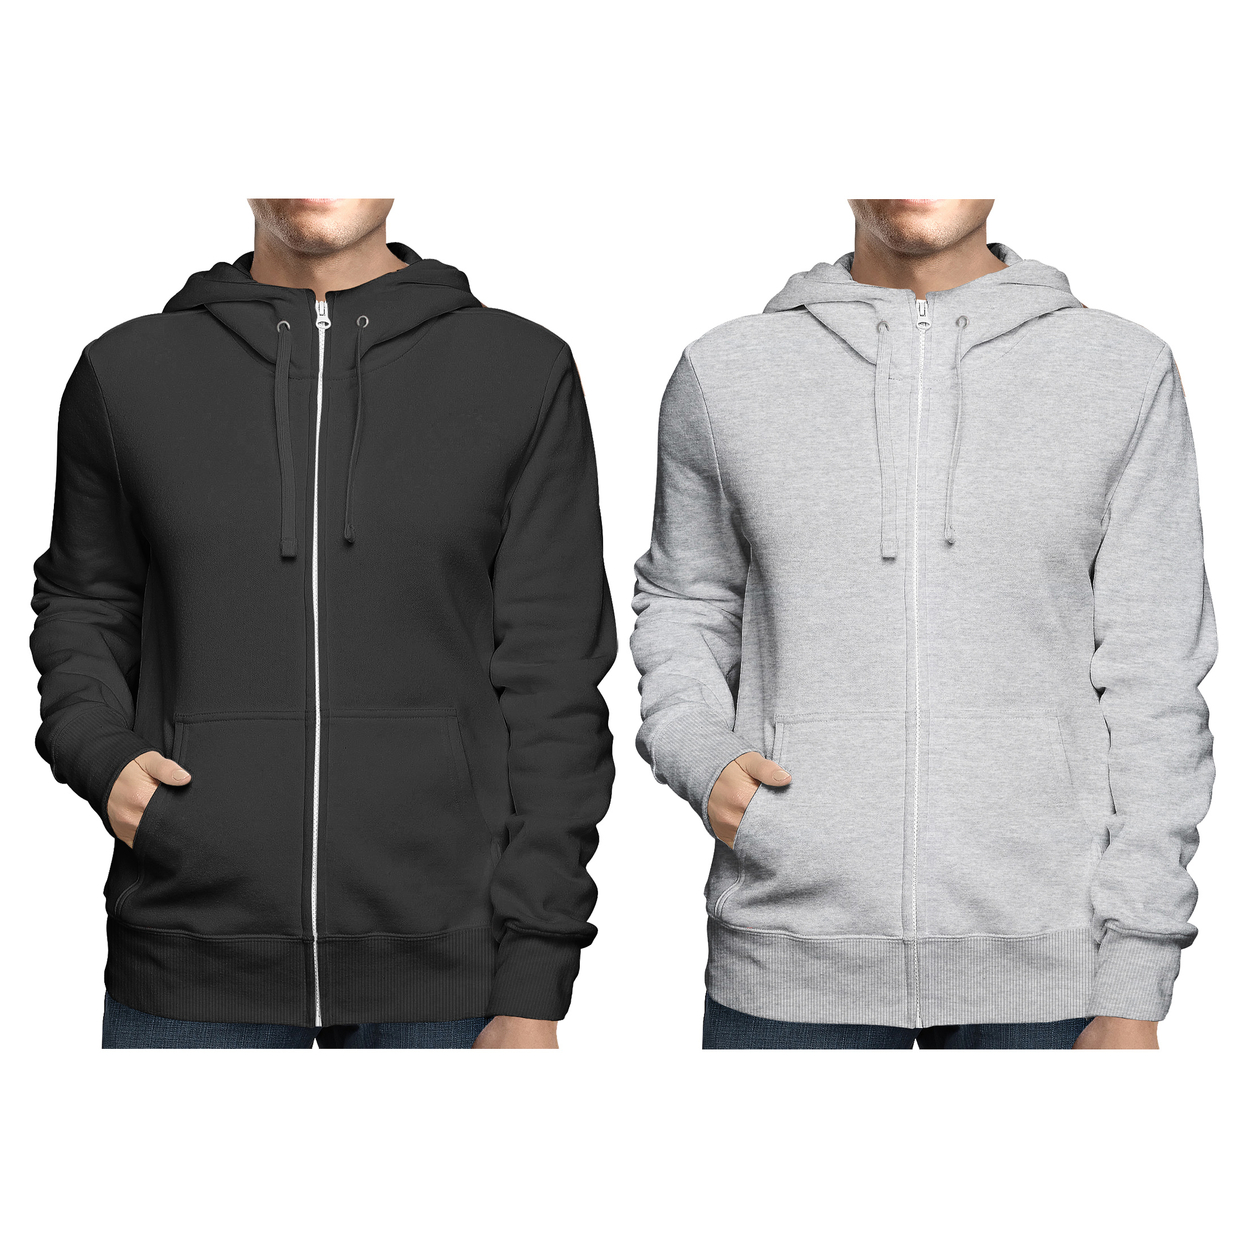 2-Pack: Men's Winter Warm Soft Full Zip-Up Fleece Lined Hoodie Sweatshirt - Black & Black, Medium